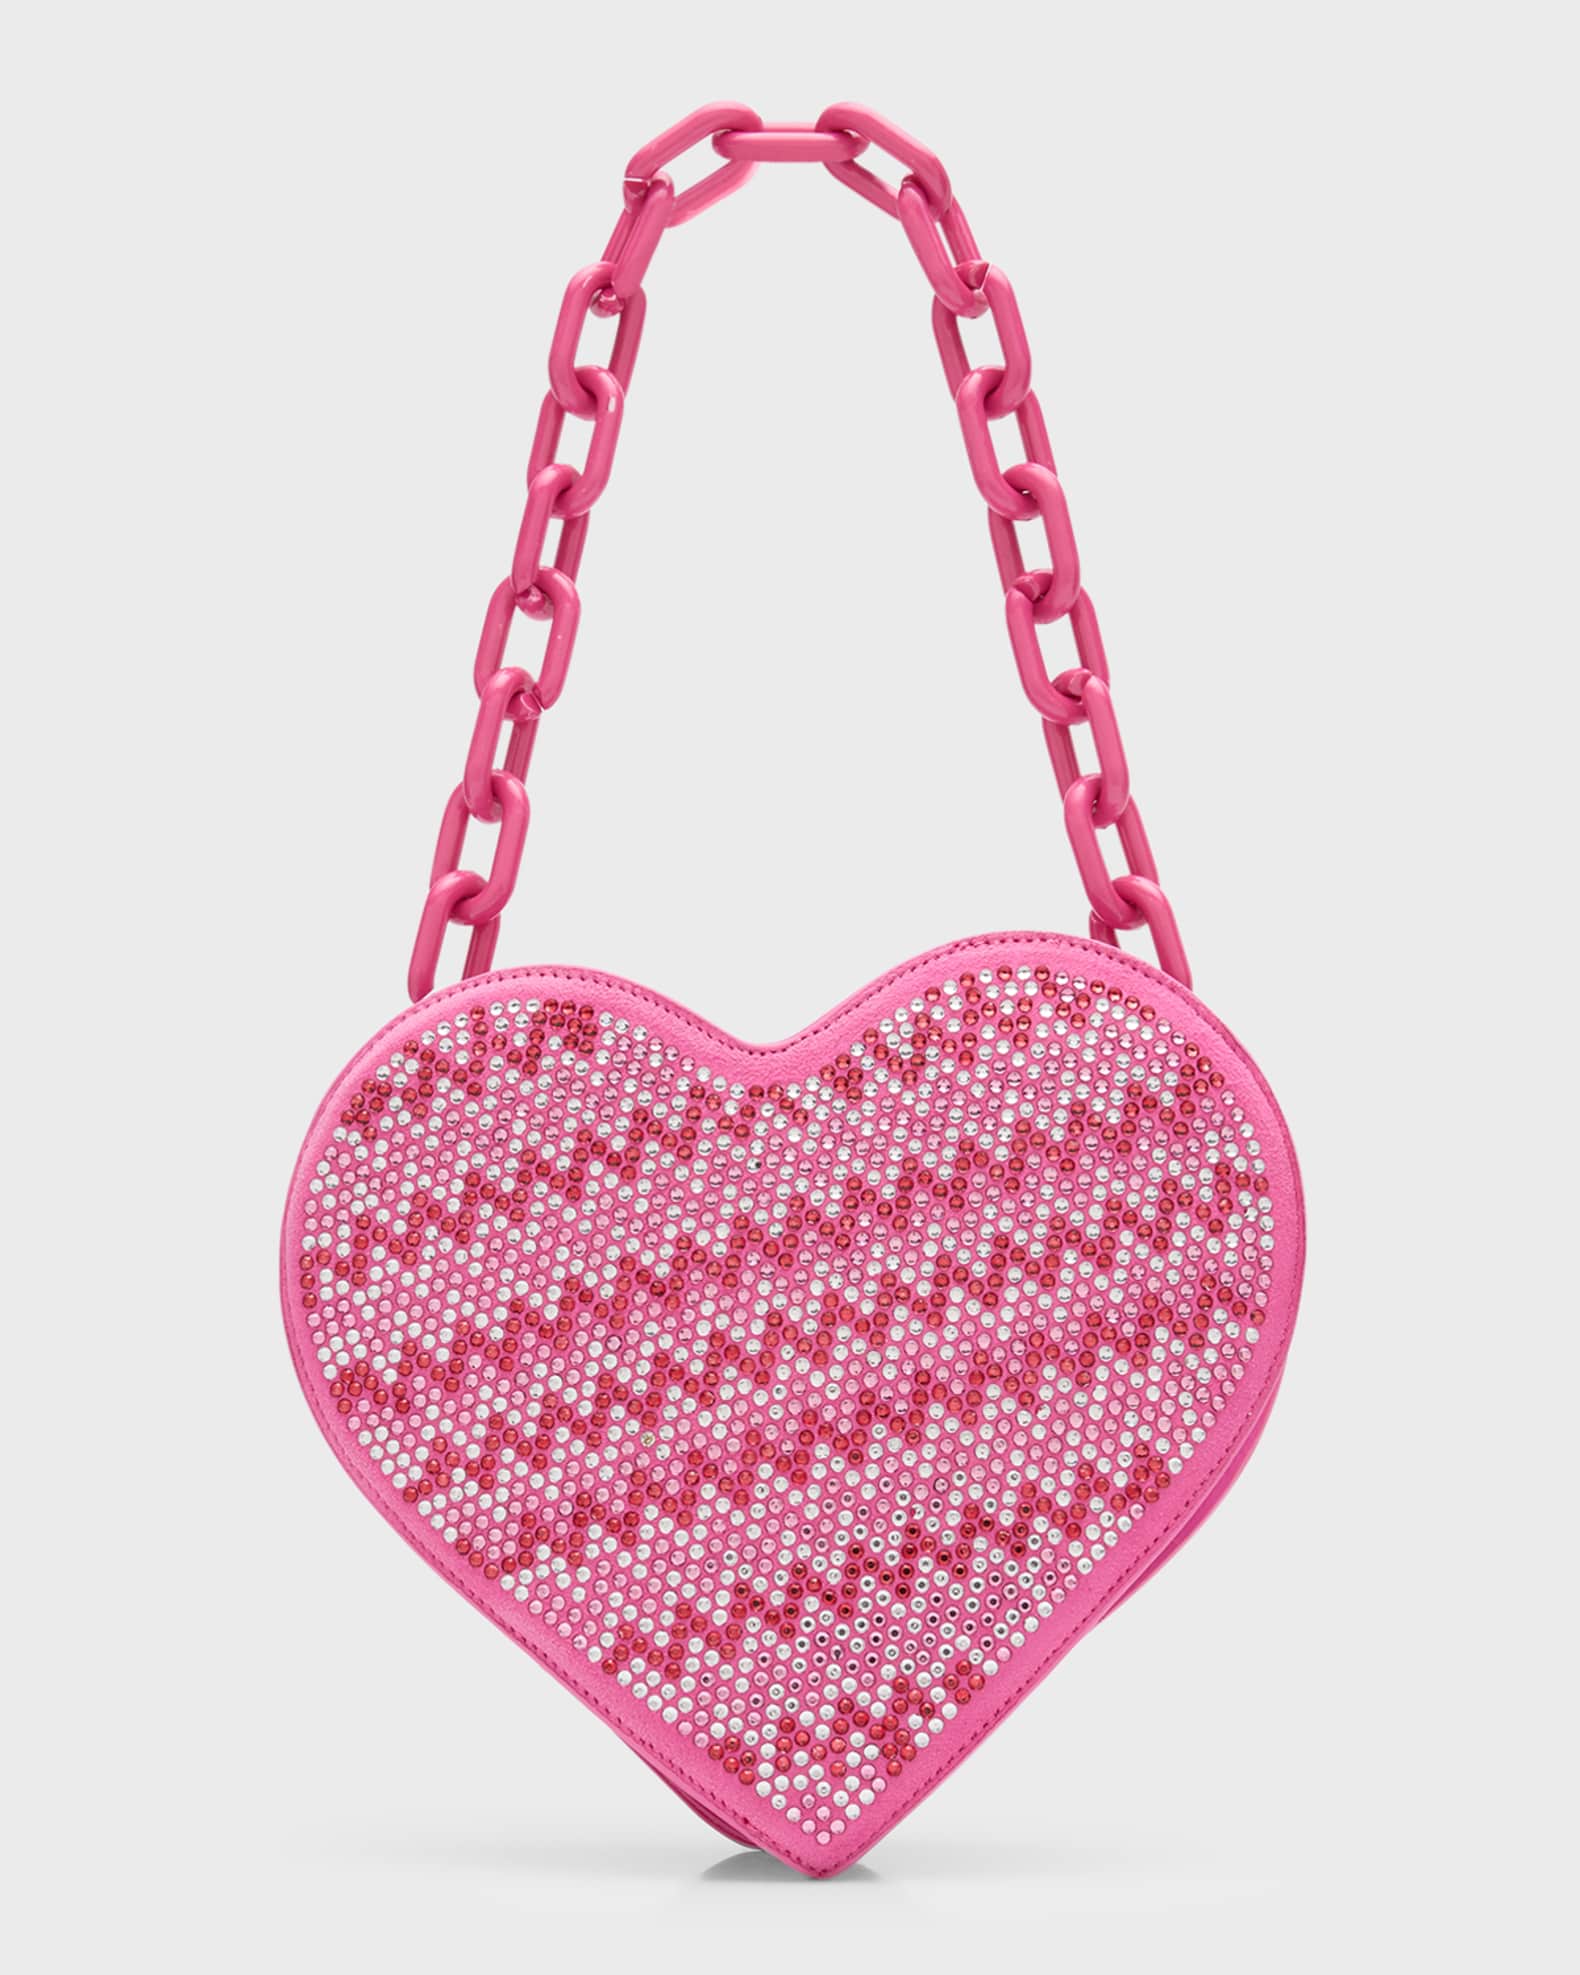 Bari Lynn Girl's Embellished Chevron Patterned Heart-Shaped Bag